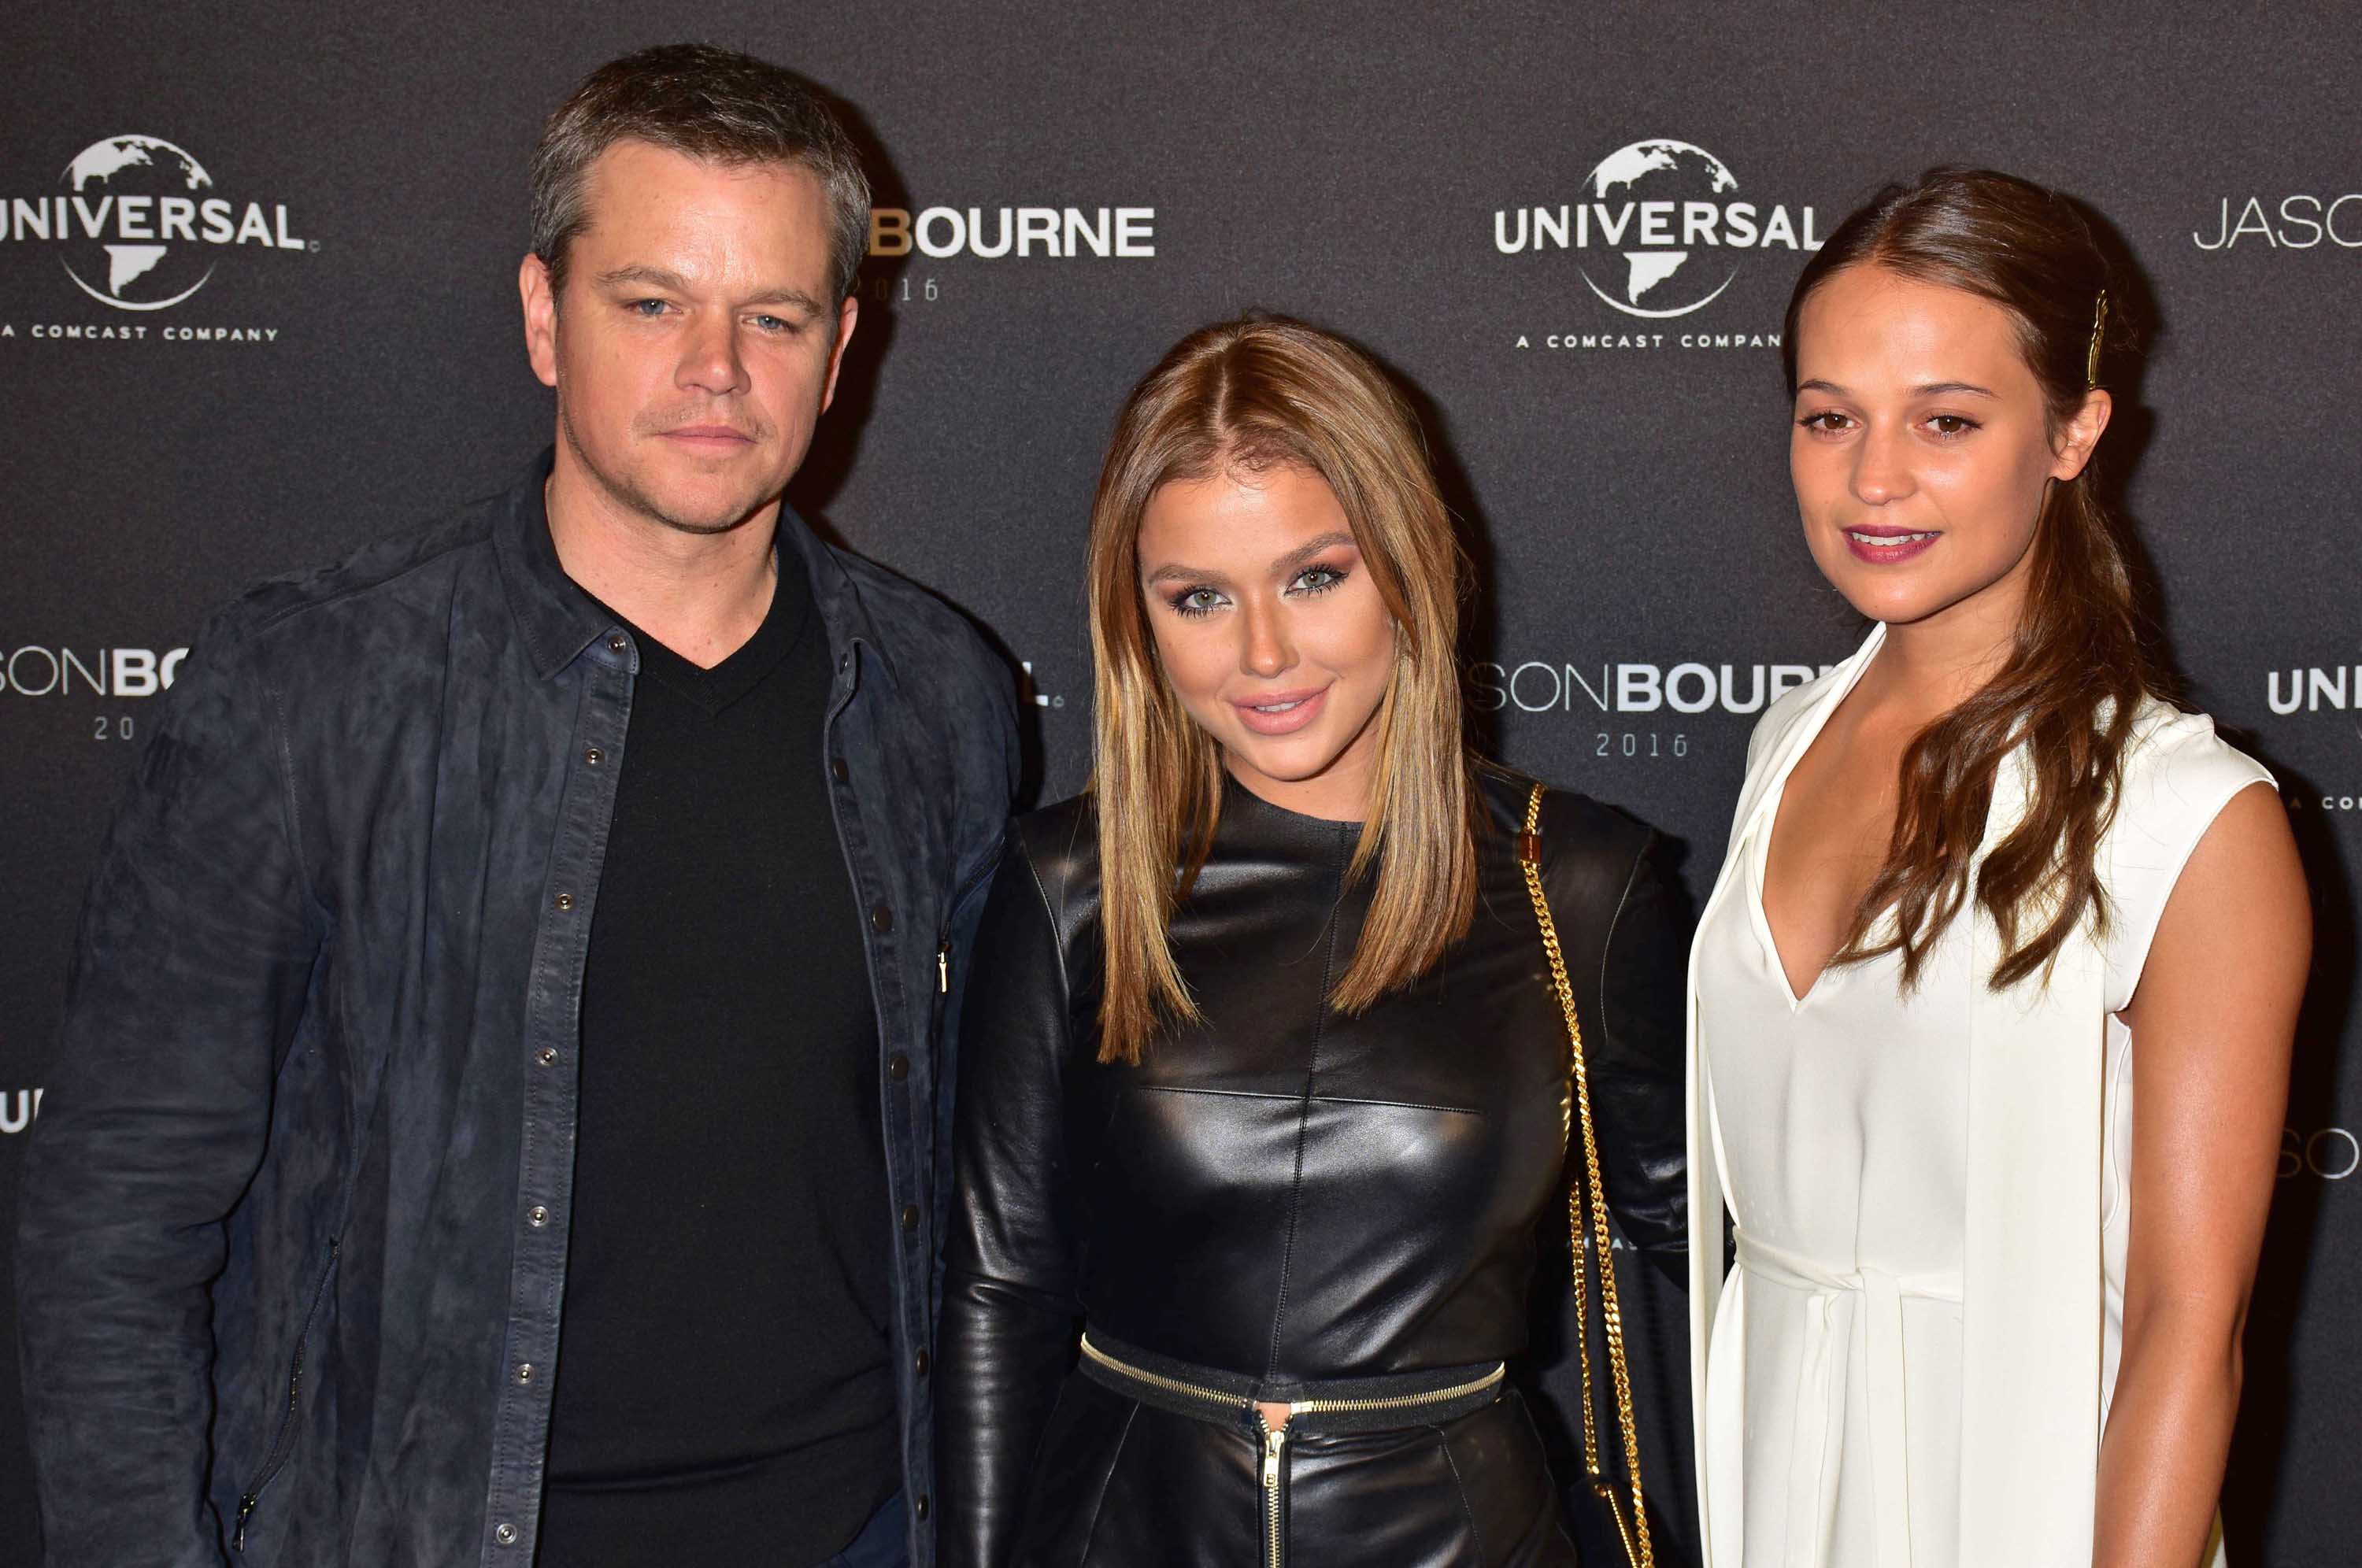 Kim Gloss attends the Jason Bourne premiere